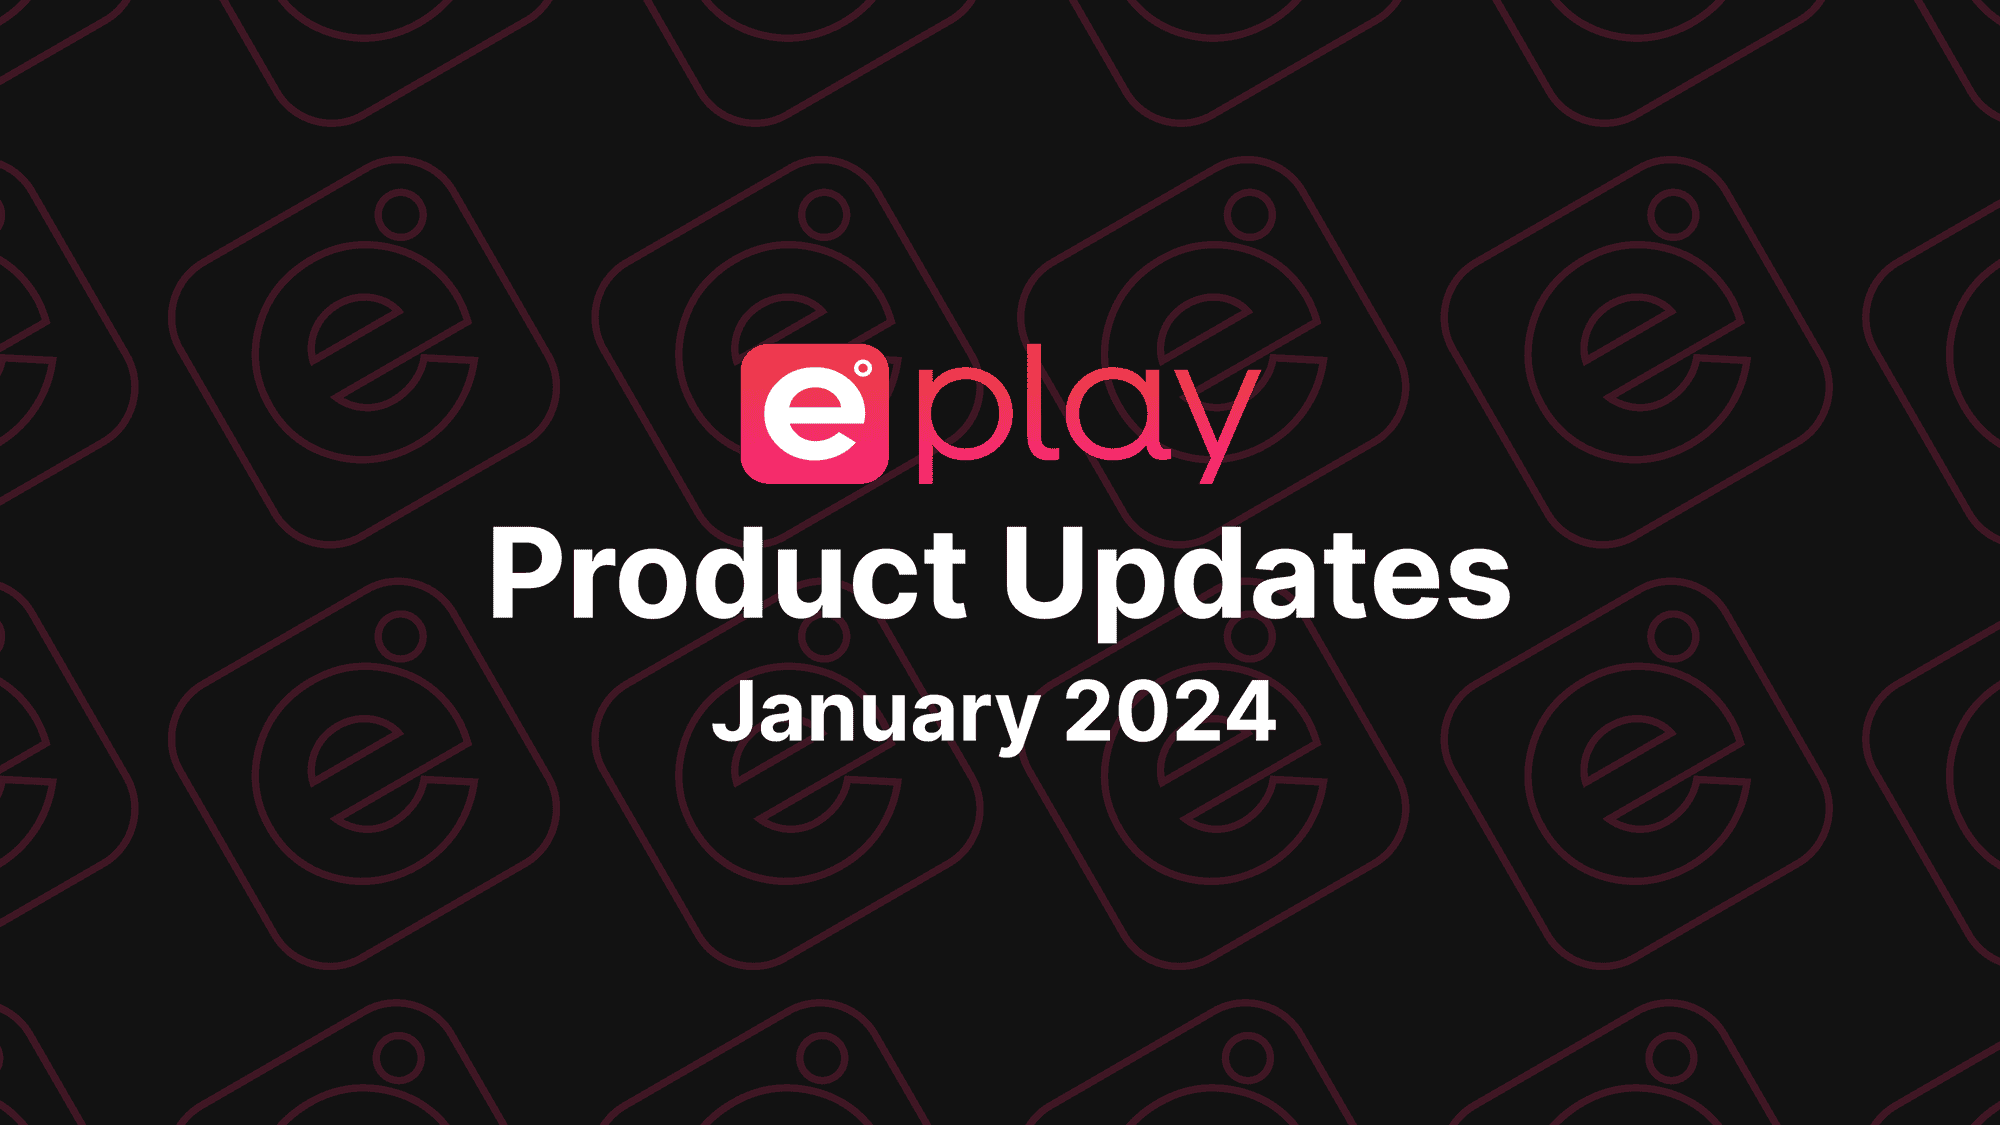 ePlay Product Updates: January 2024